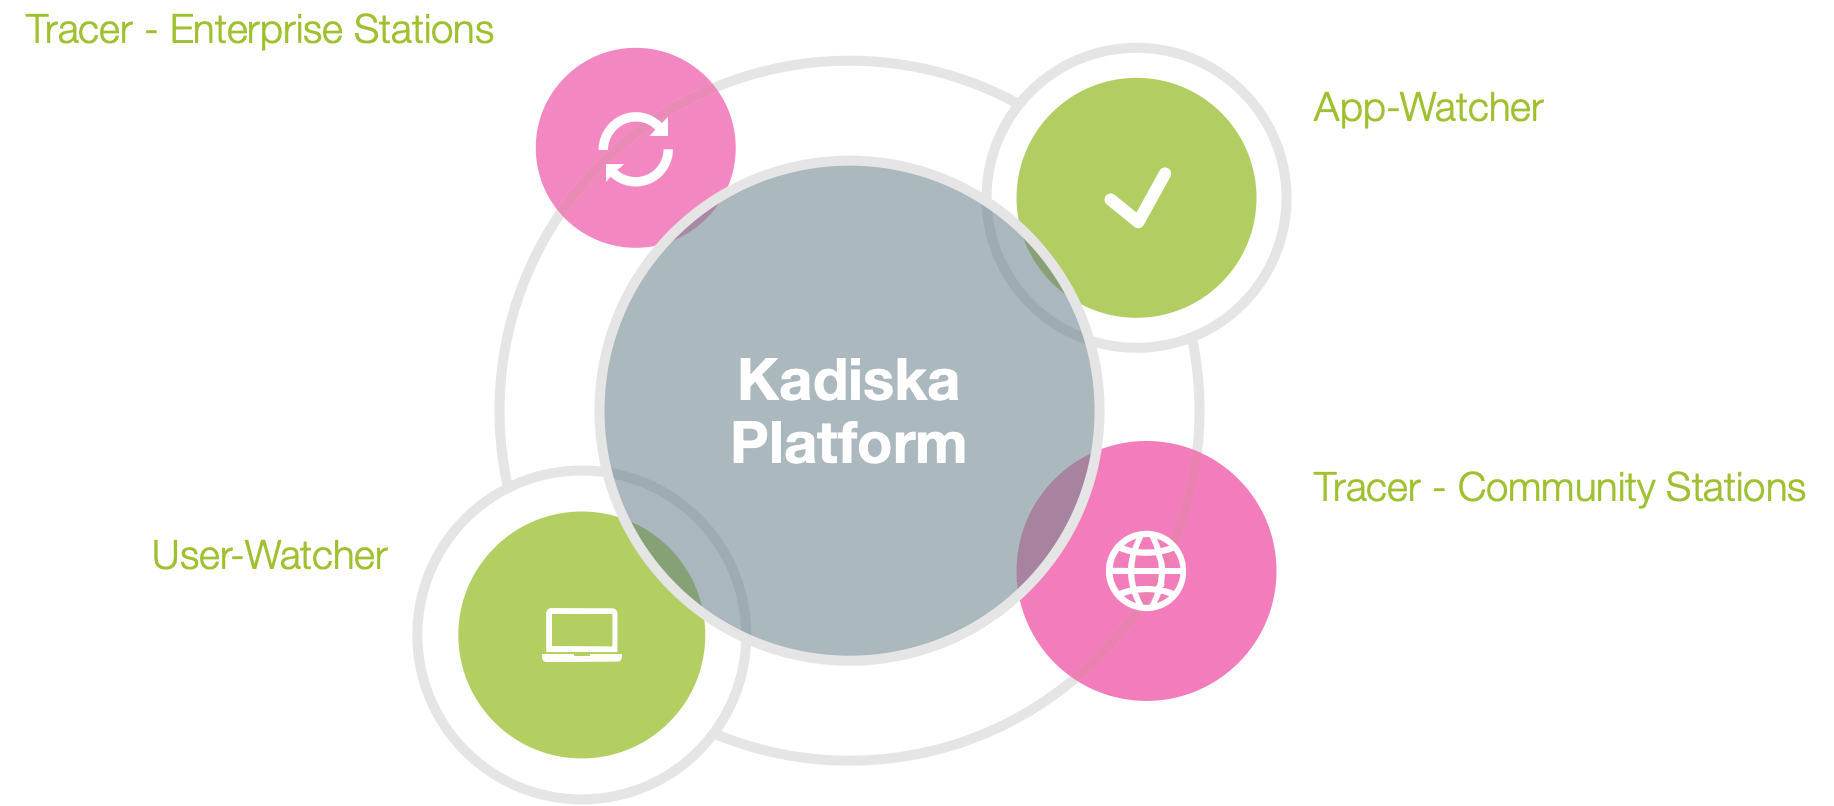 Kadiska's performance analytics